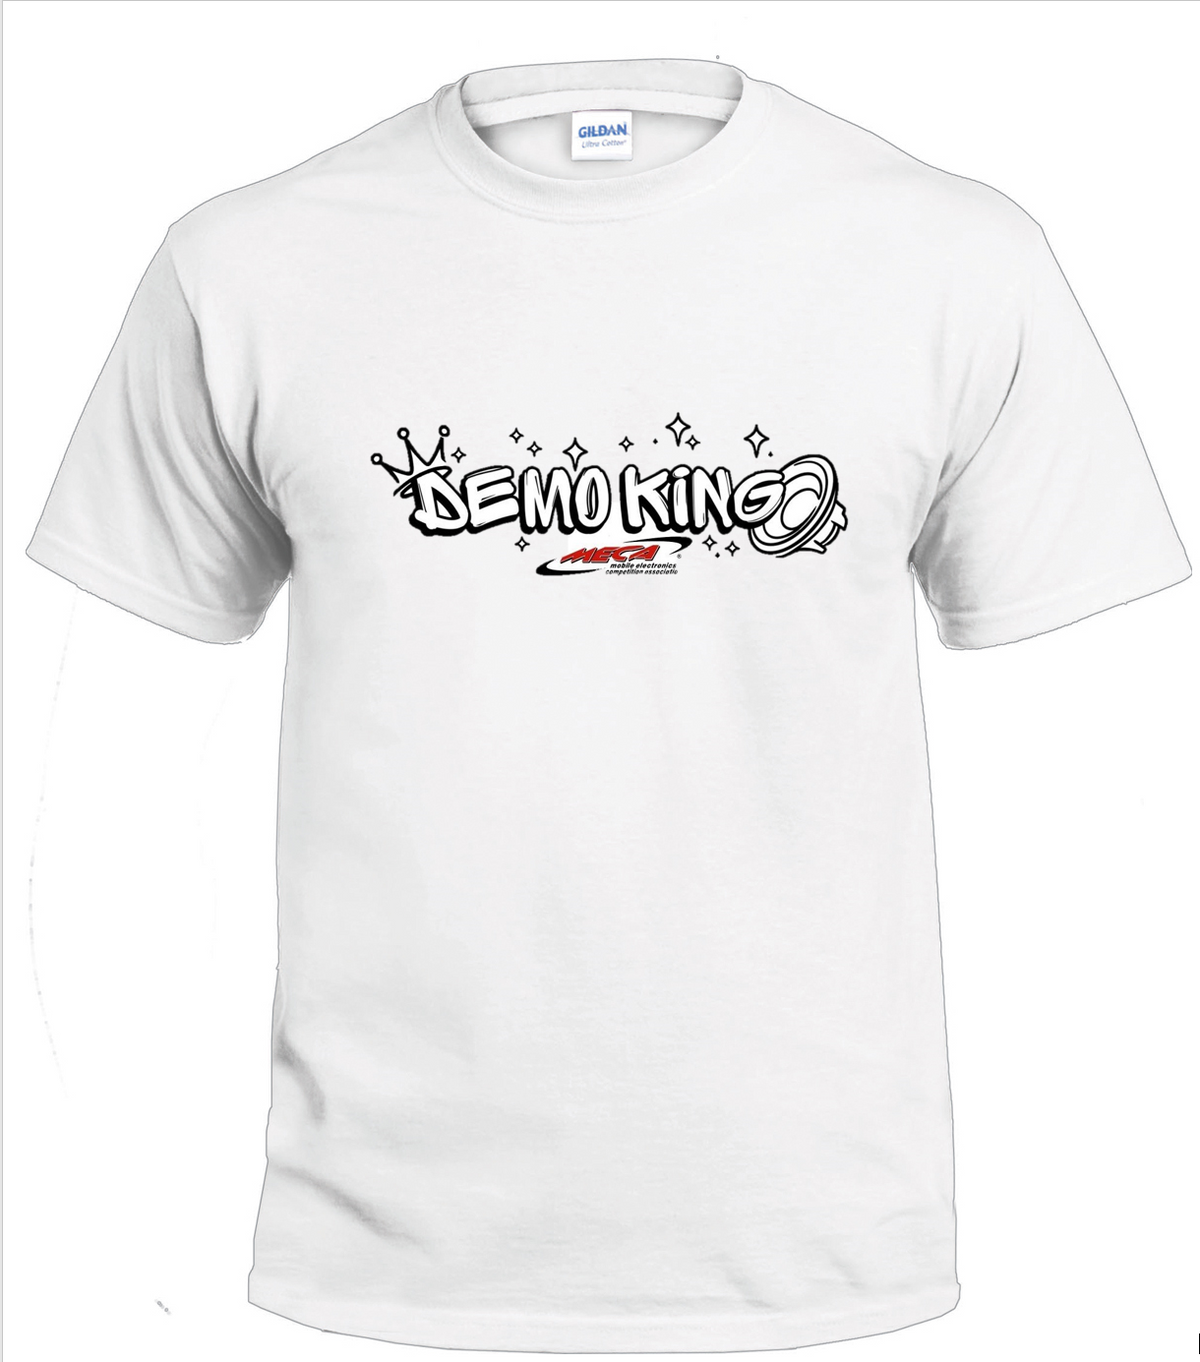 Demo King t-shirt